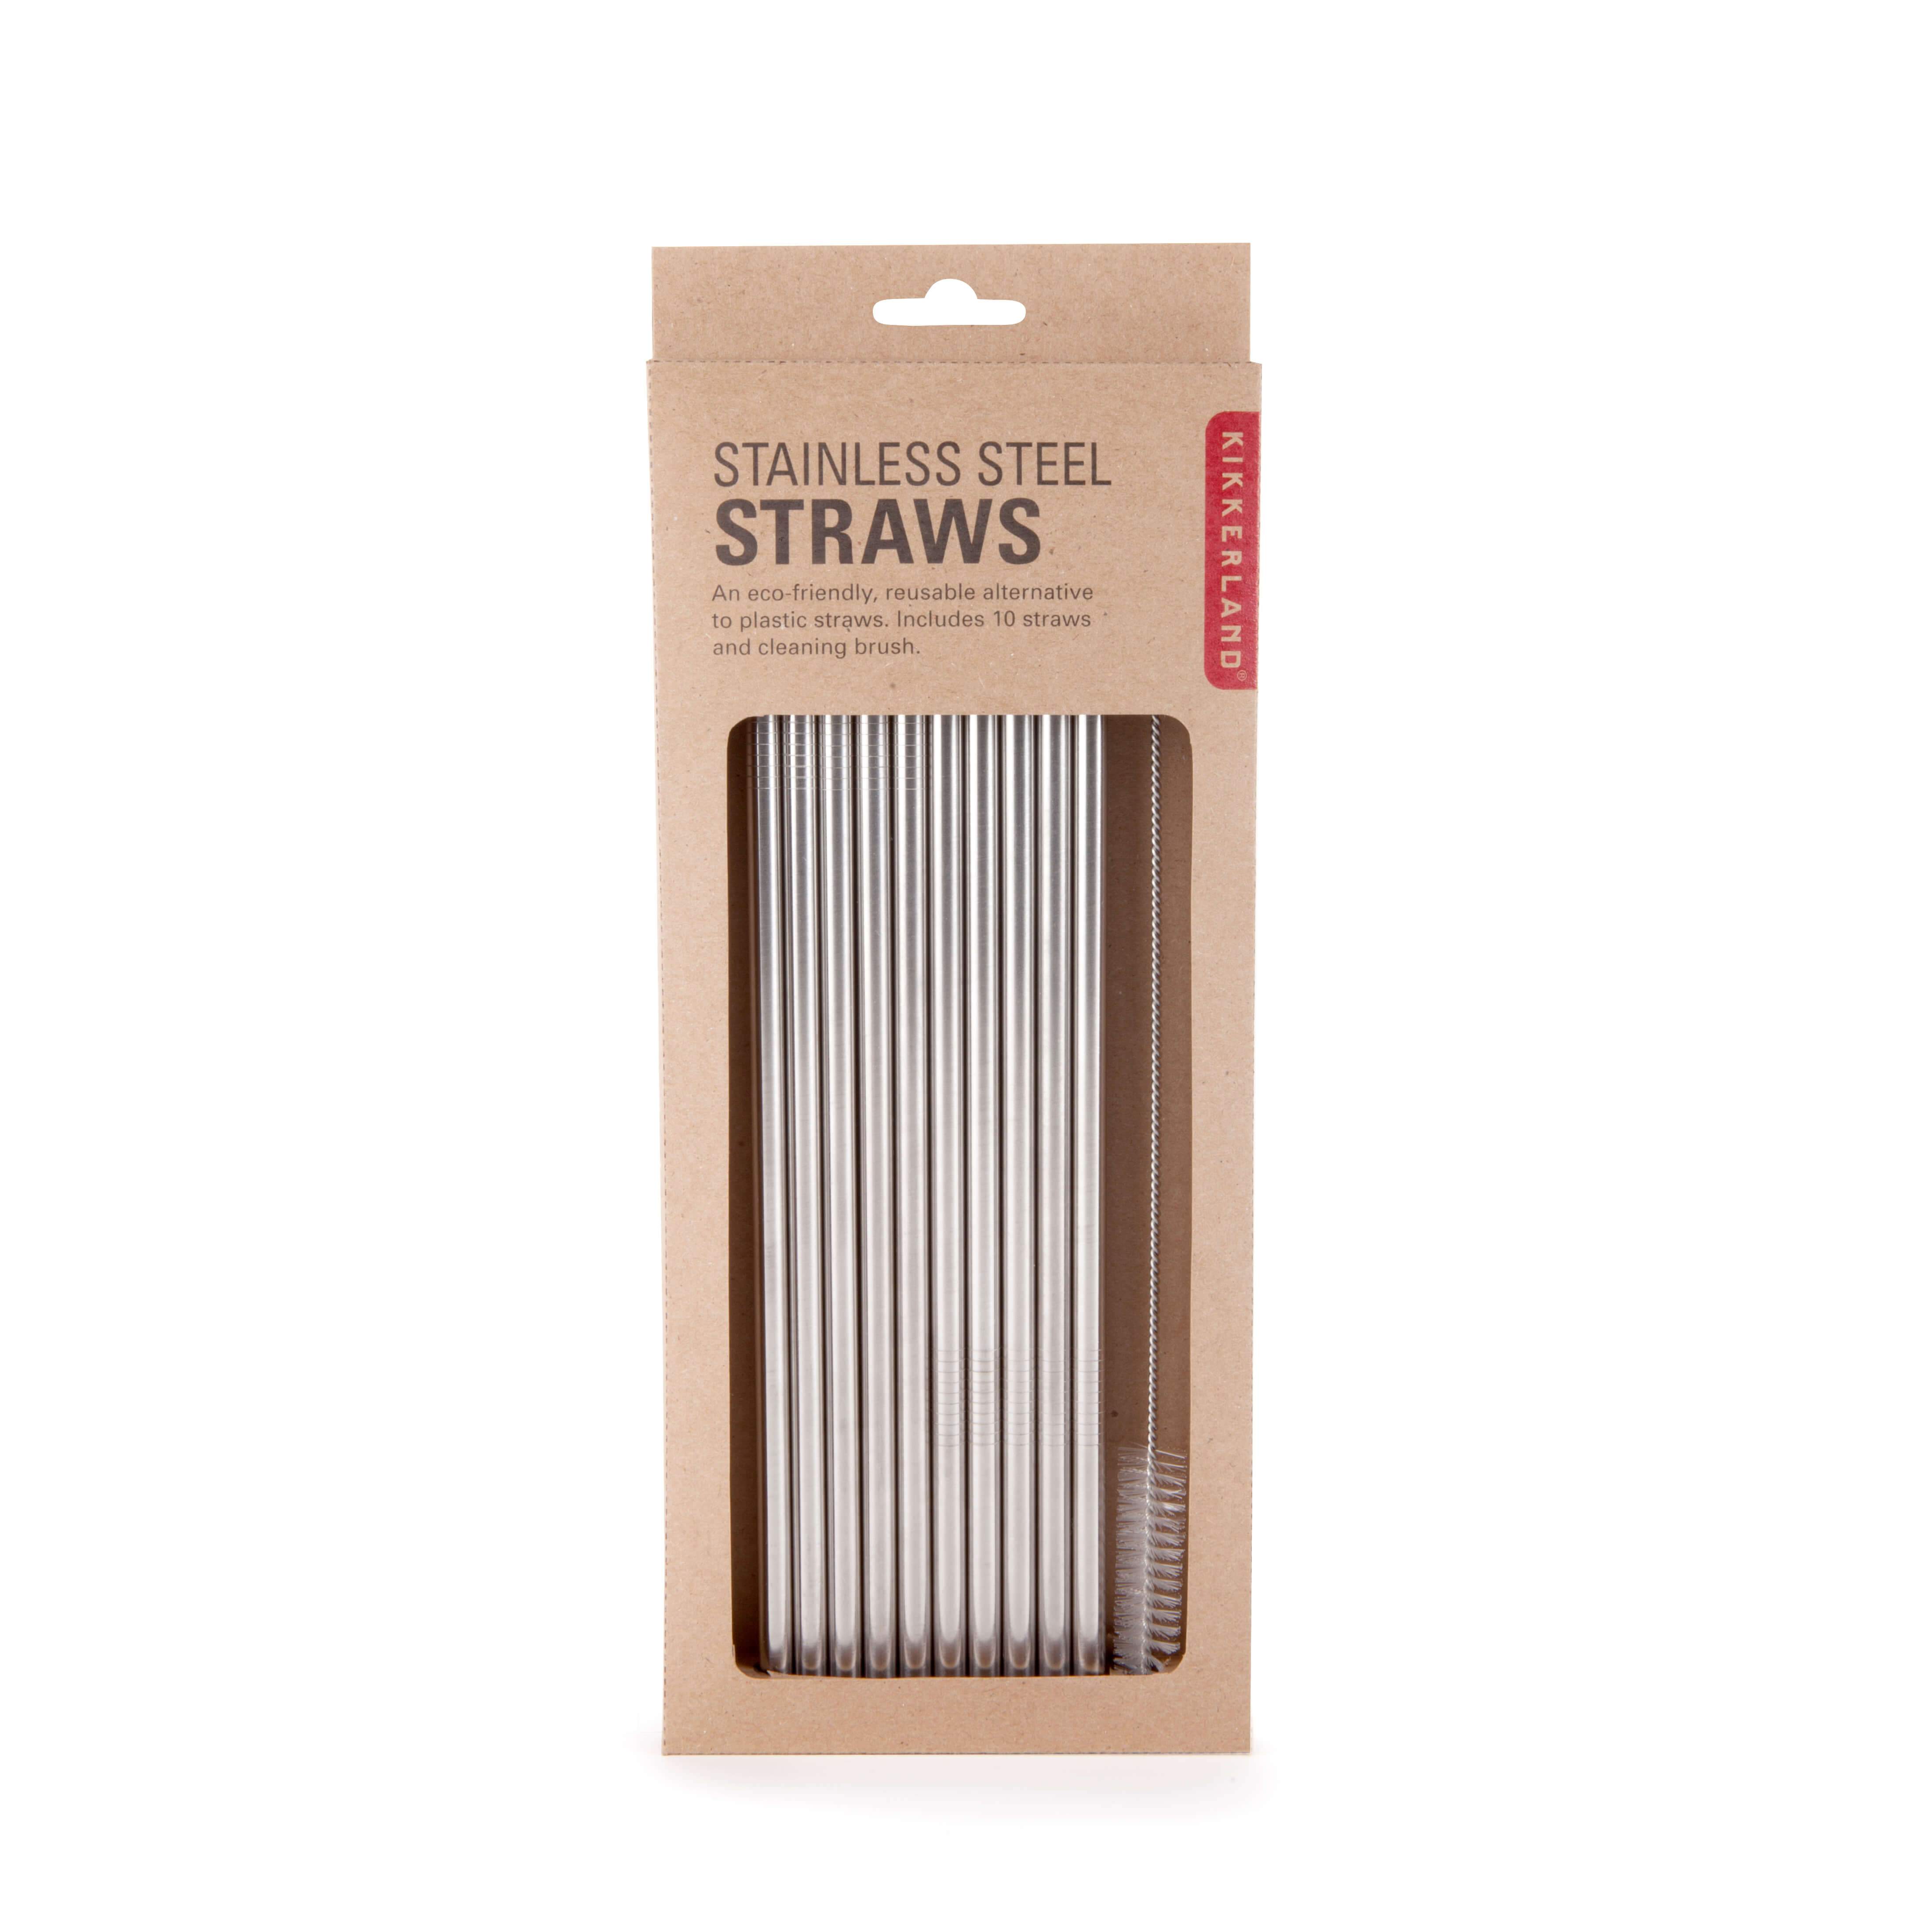 Stainless Steel Straws - Pailles réutilisables 10pcs + brosse Kikkerland 